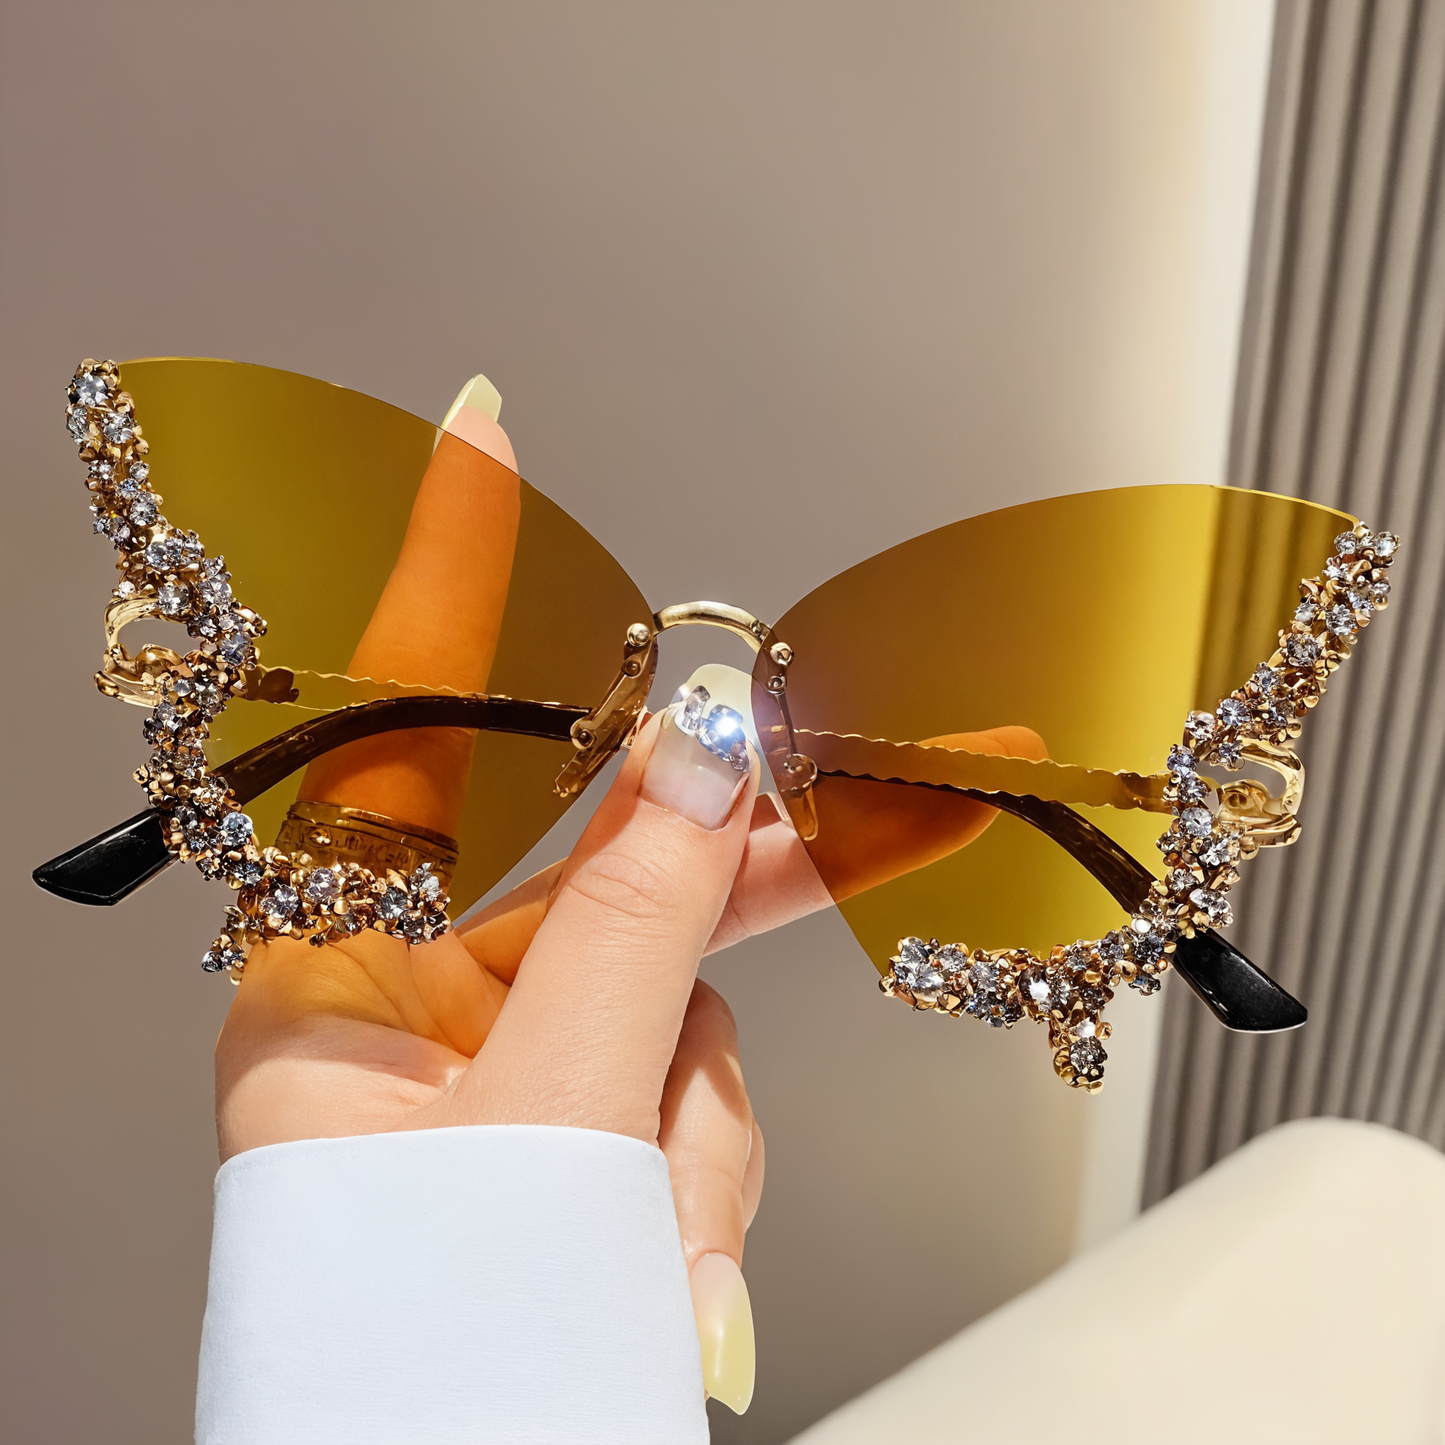 Grace Butterfly Glasses